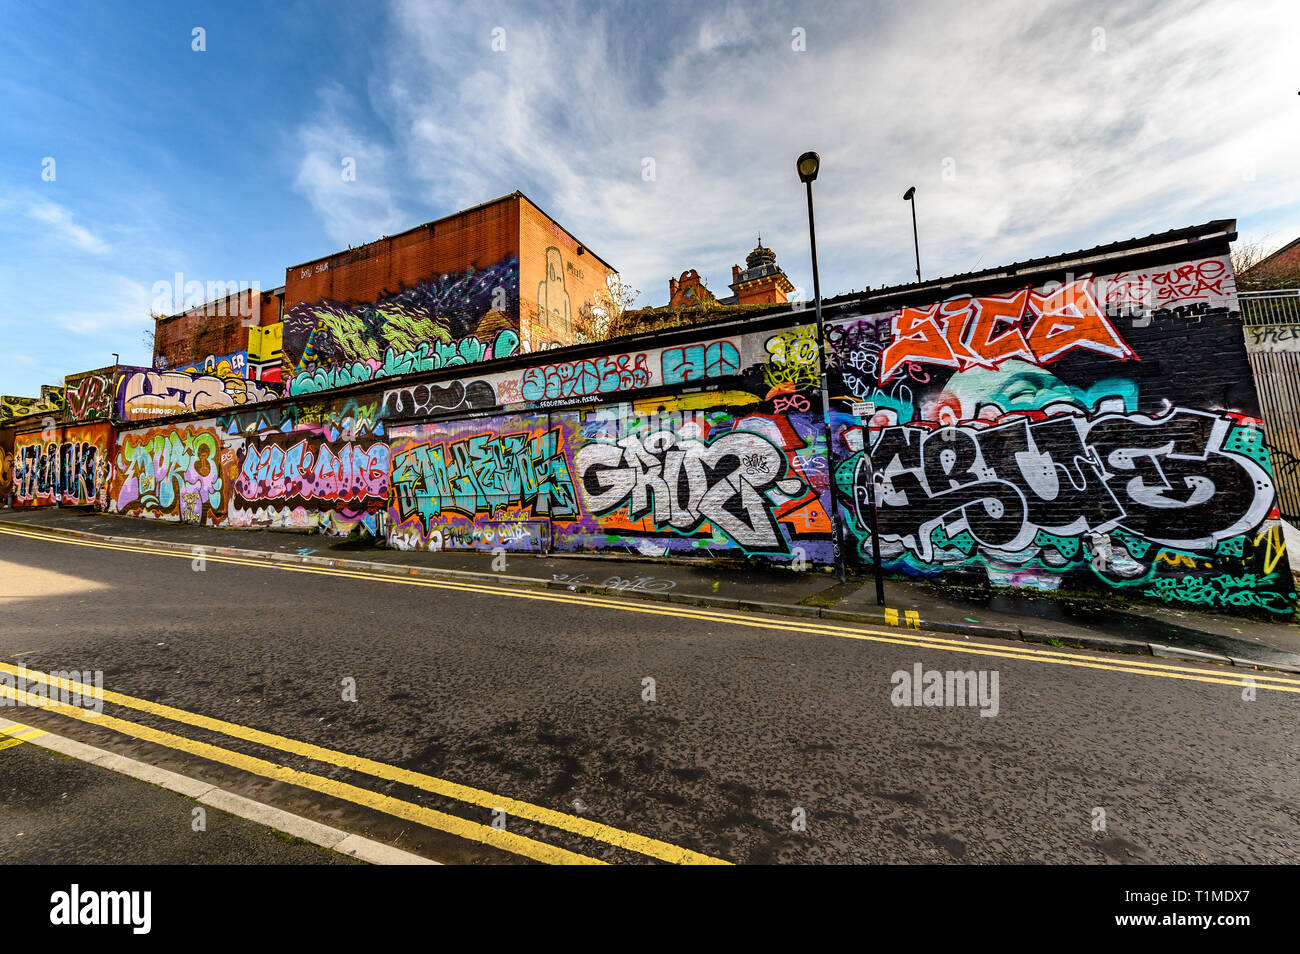 Wall Graffiti, vallée de Ouseburn, Newcastle upon Tyne Banque D'Images